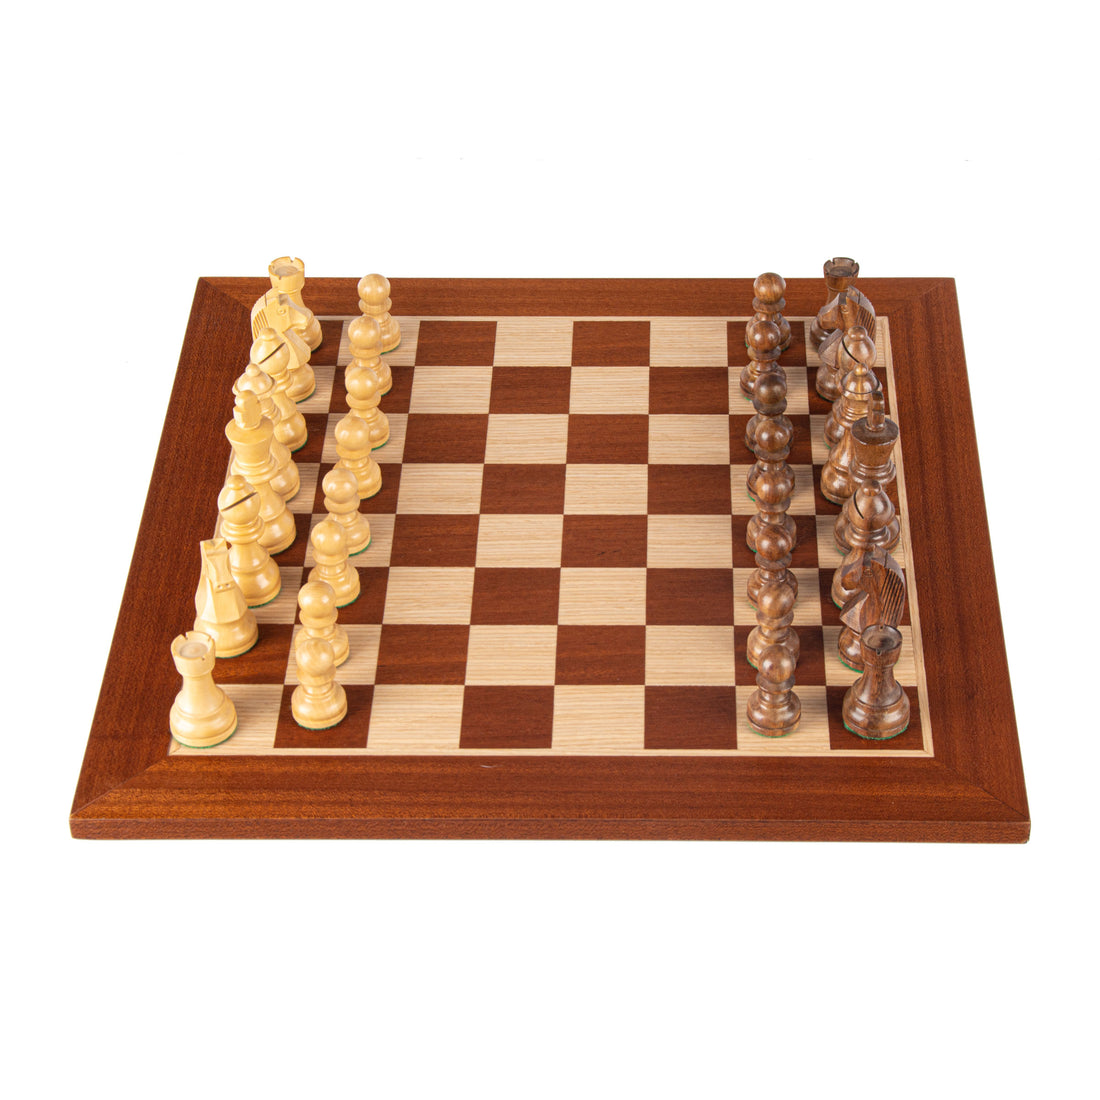 Mahogany Chess Set - 50x50cm with Staunton Chessmen (8.5cm King) - Premium Chess from MANOPOULOS Chess & Backgammon - Just €208! Shop now at MANOPOULOS Chess & Backgammon